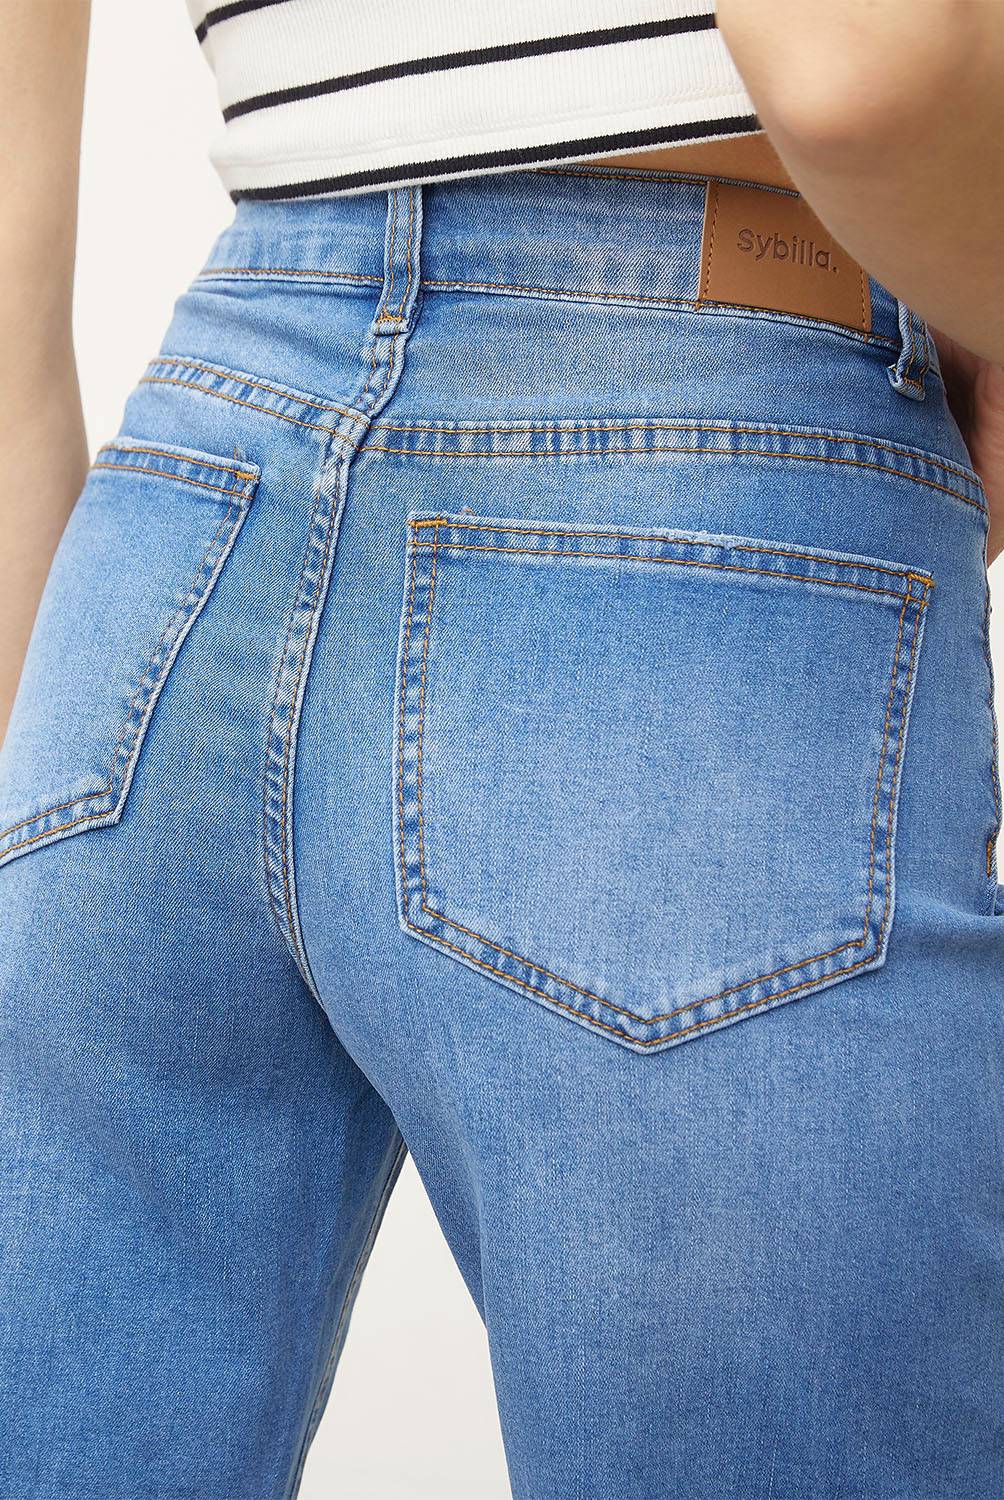 SYBILLA Jeans Cropped Tiro Alto Mujer Sybilla